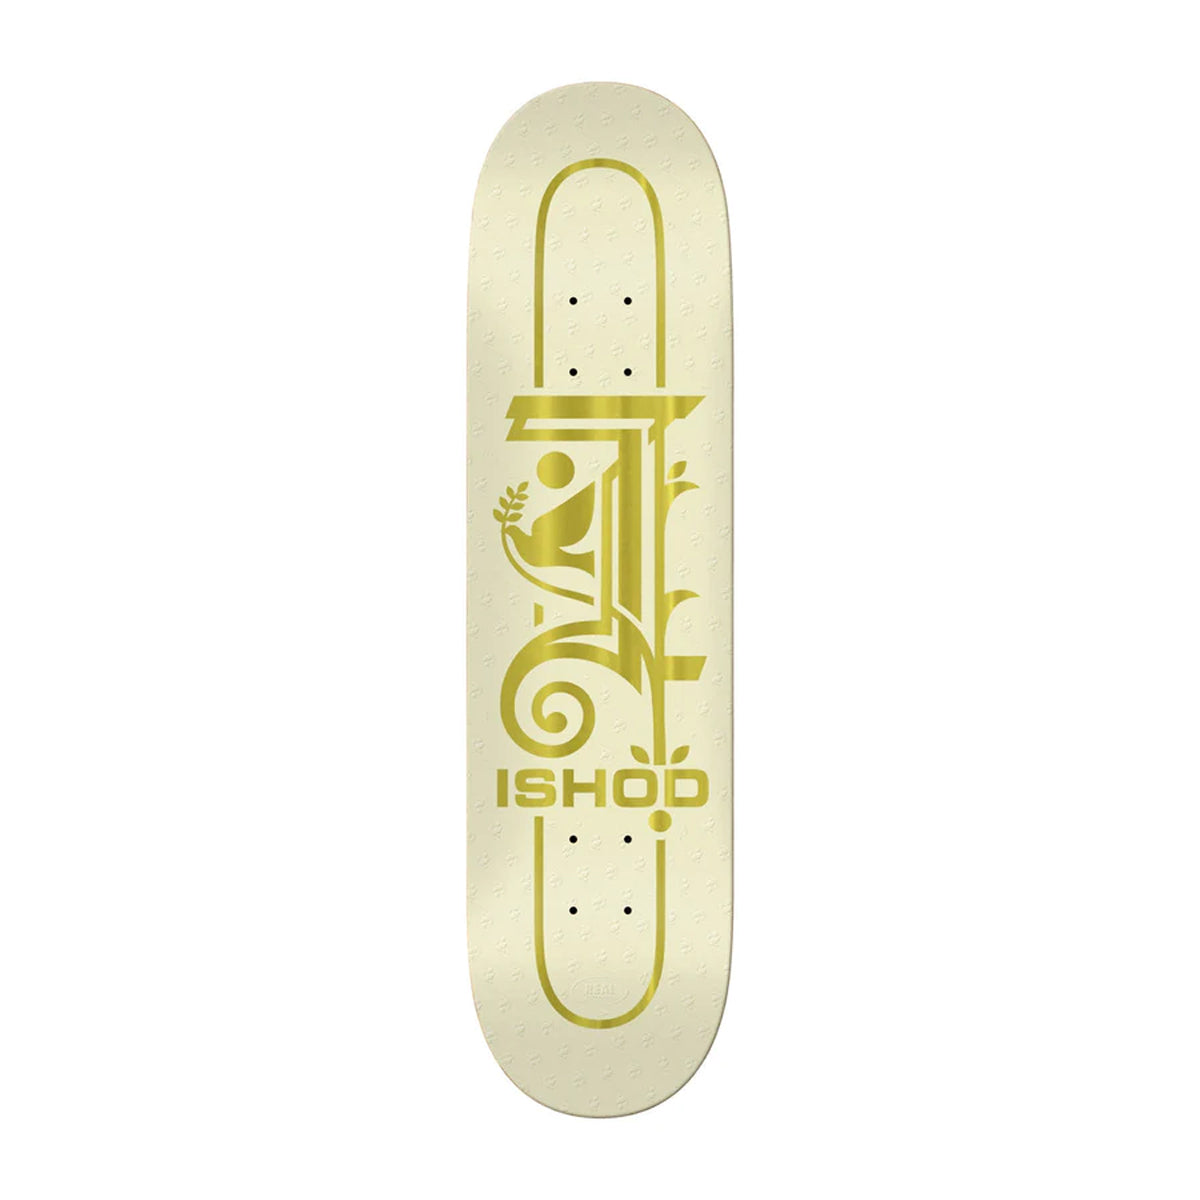 Real Ishod Wair Crest Skateboard Deck 8.25"